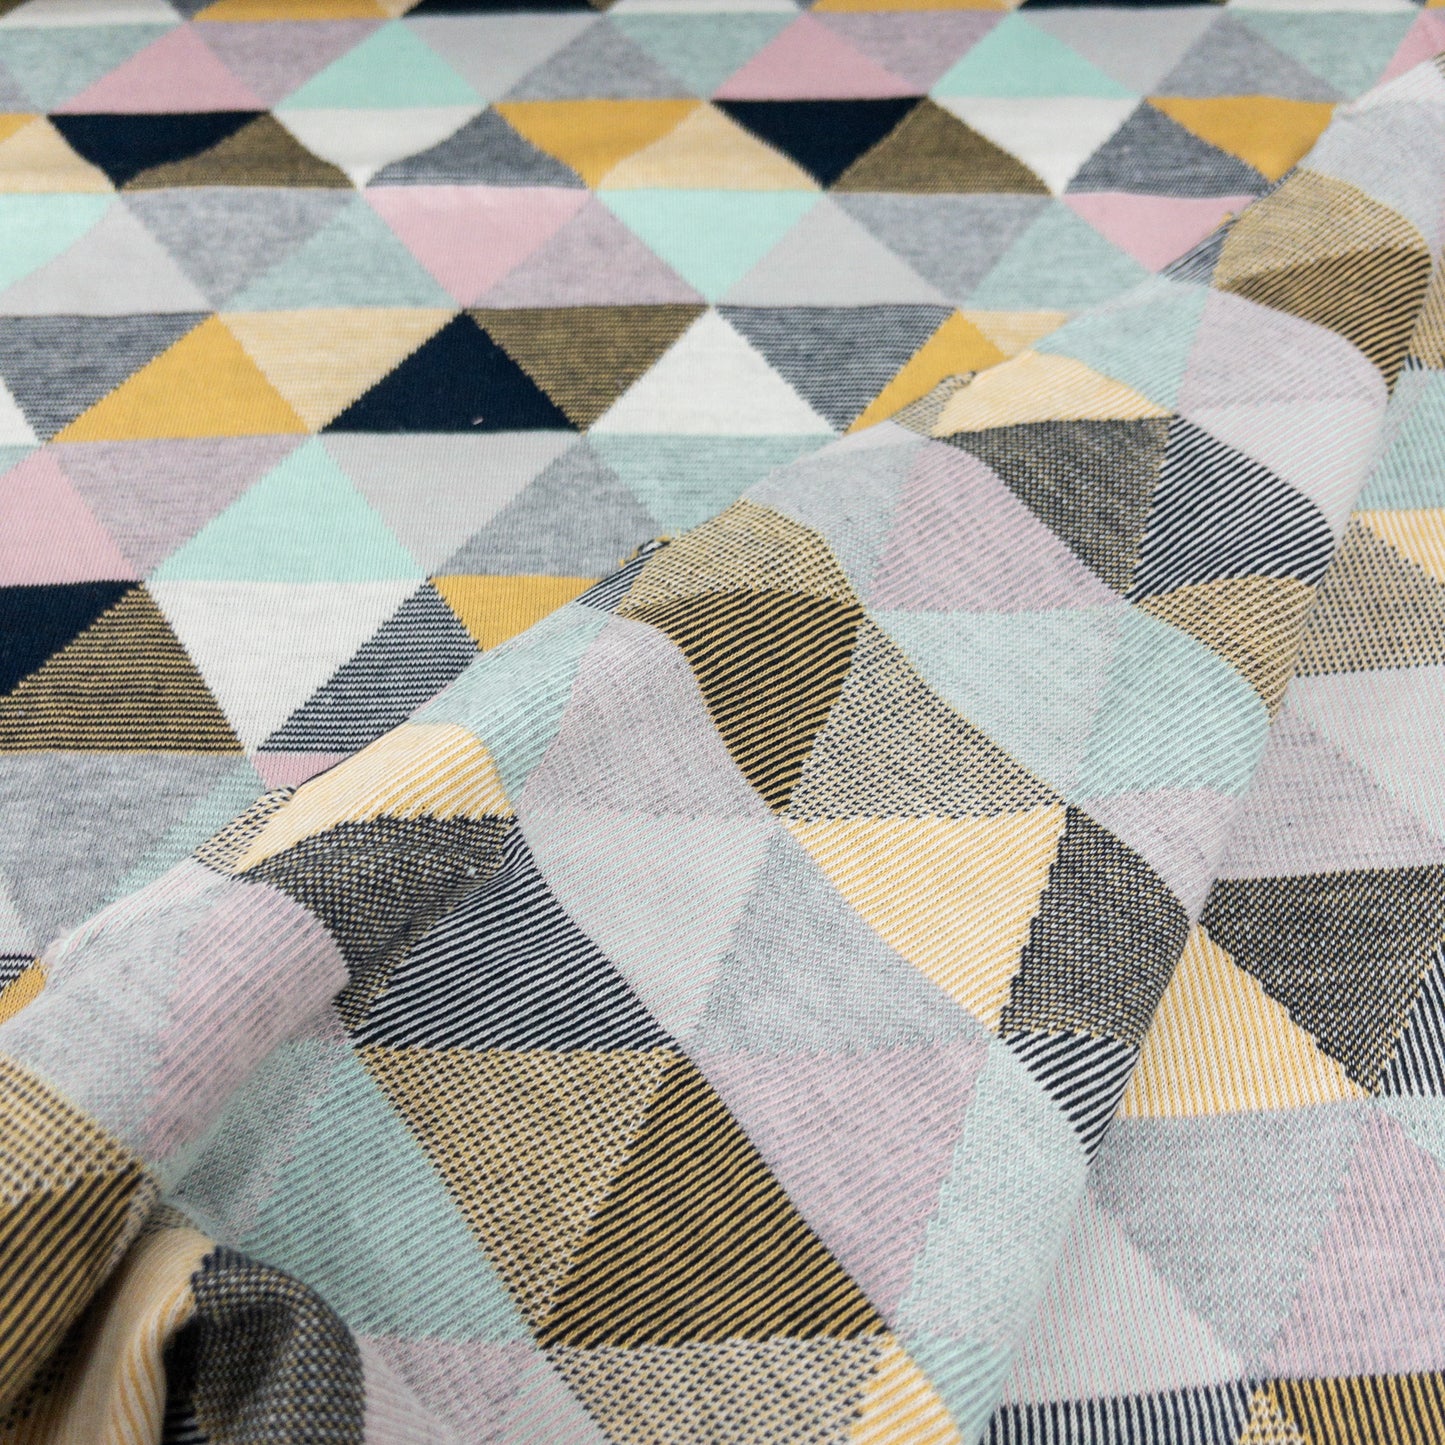 maffon | triangle patterns mint pink navy yellow 三角拼色 粉藍黃薄荷綠 | cotton jacquard knit 雙面純棉提花針織 - 170cm